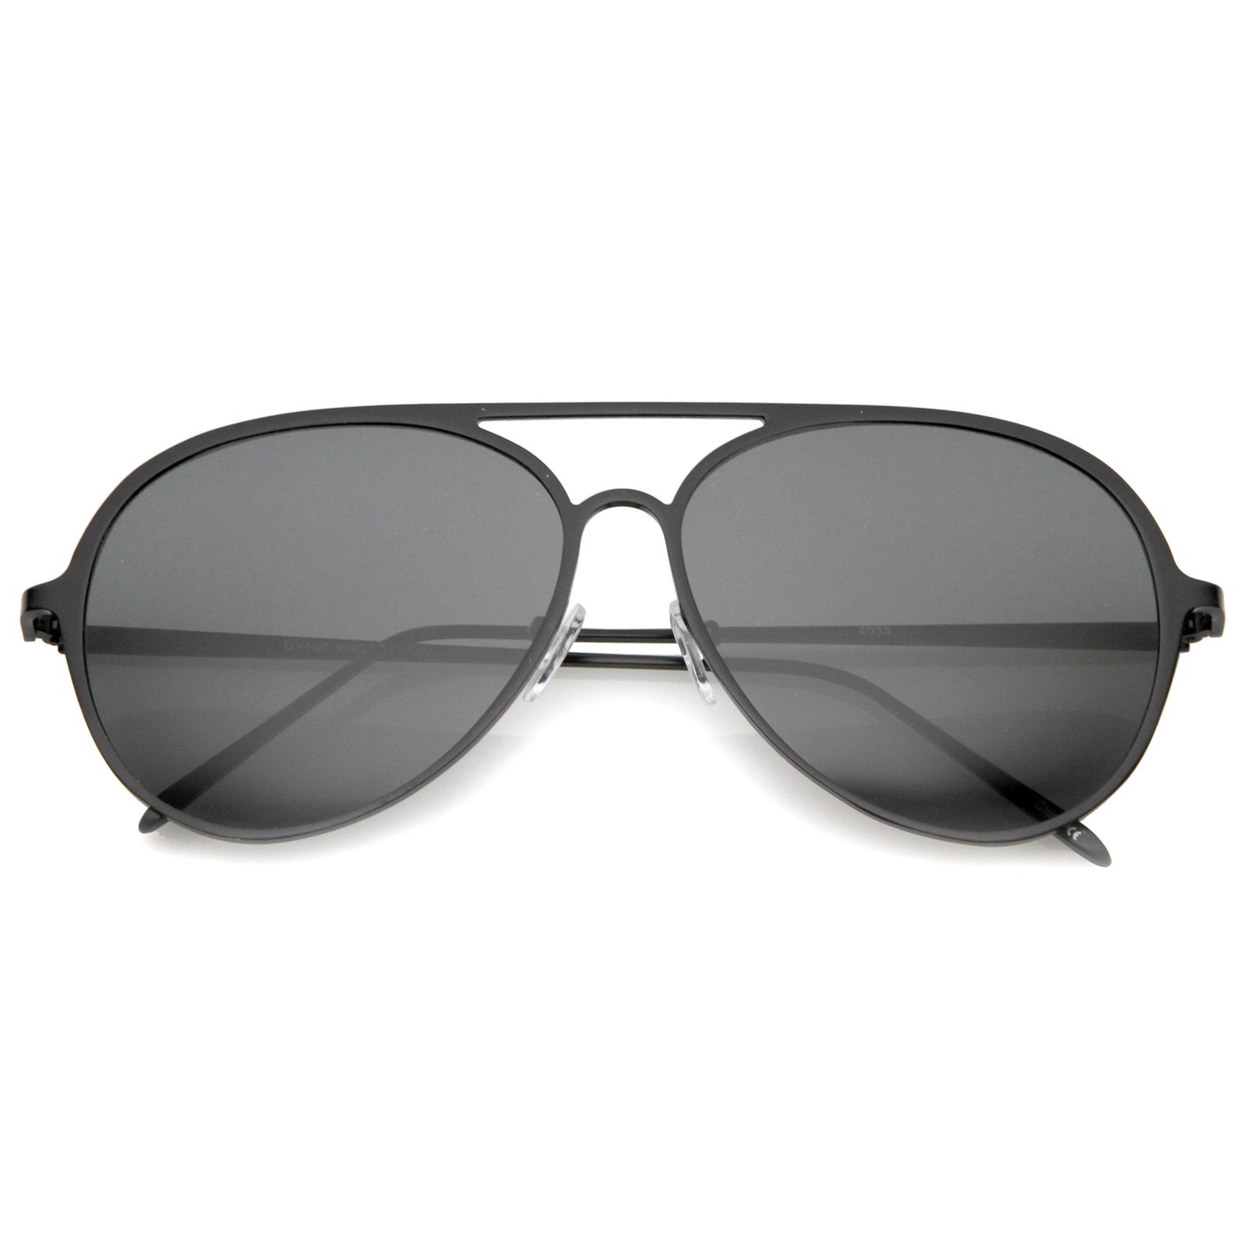 Oversize Metal Frame Double Nose Bridge Slim Temple Aviator Sunglasses 58mm - Matte Gold / Brown